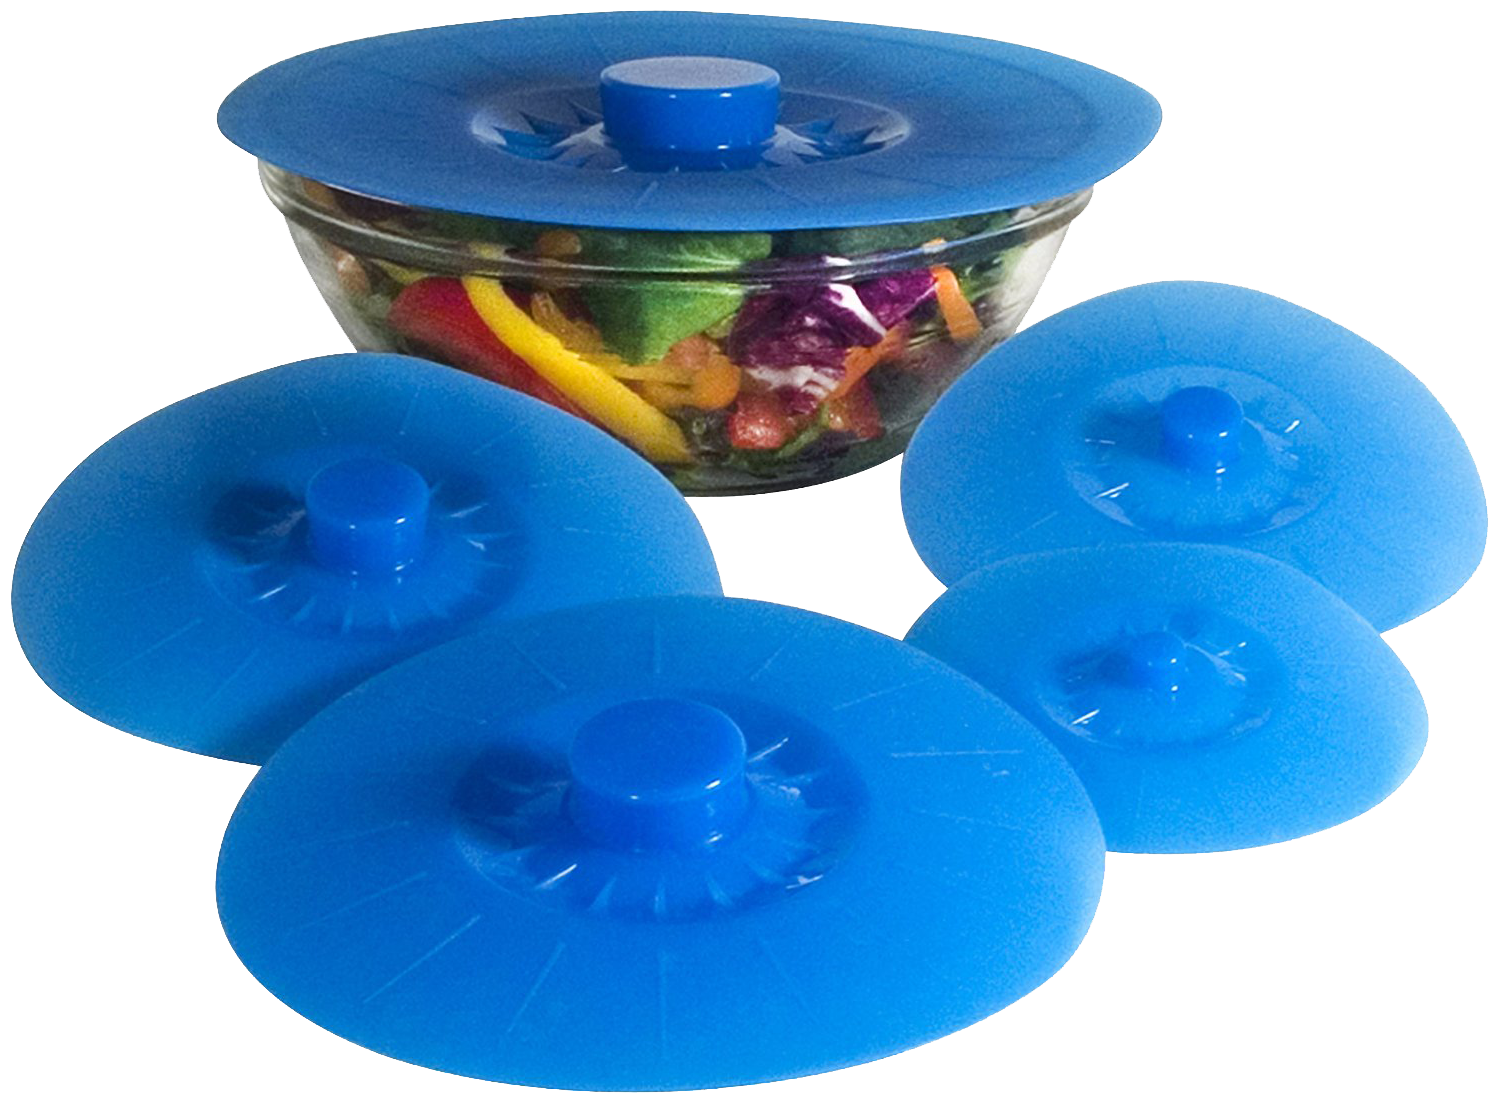 Silicone Lids, Microwave Splatter Cover, 5 Sizes Reusable Heat Resistant  Food Suction Lids Fits Cups, Bowls, Plates, Pots, Pans, Skillets, Stove Top